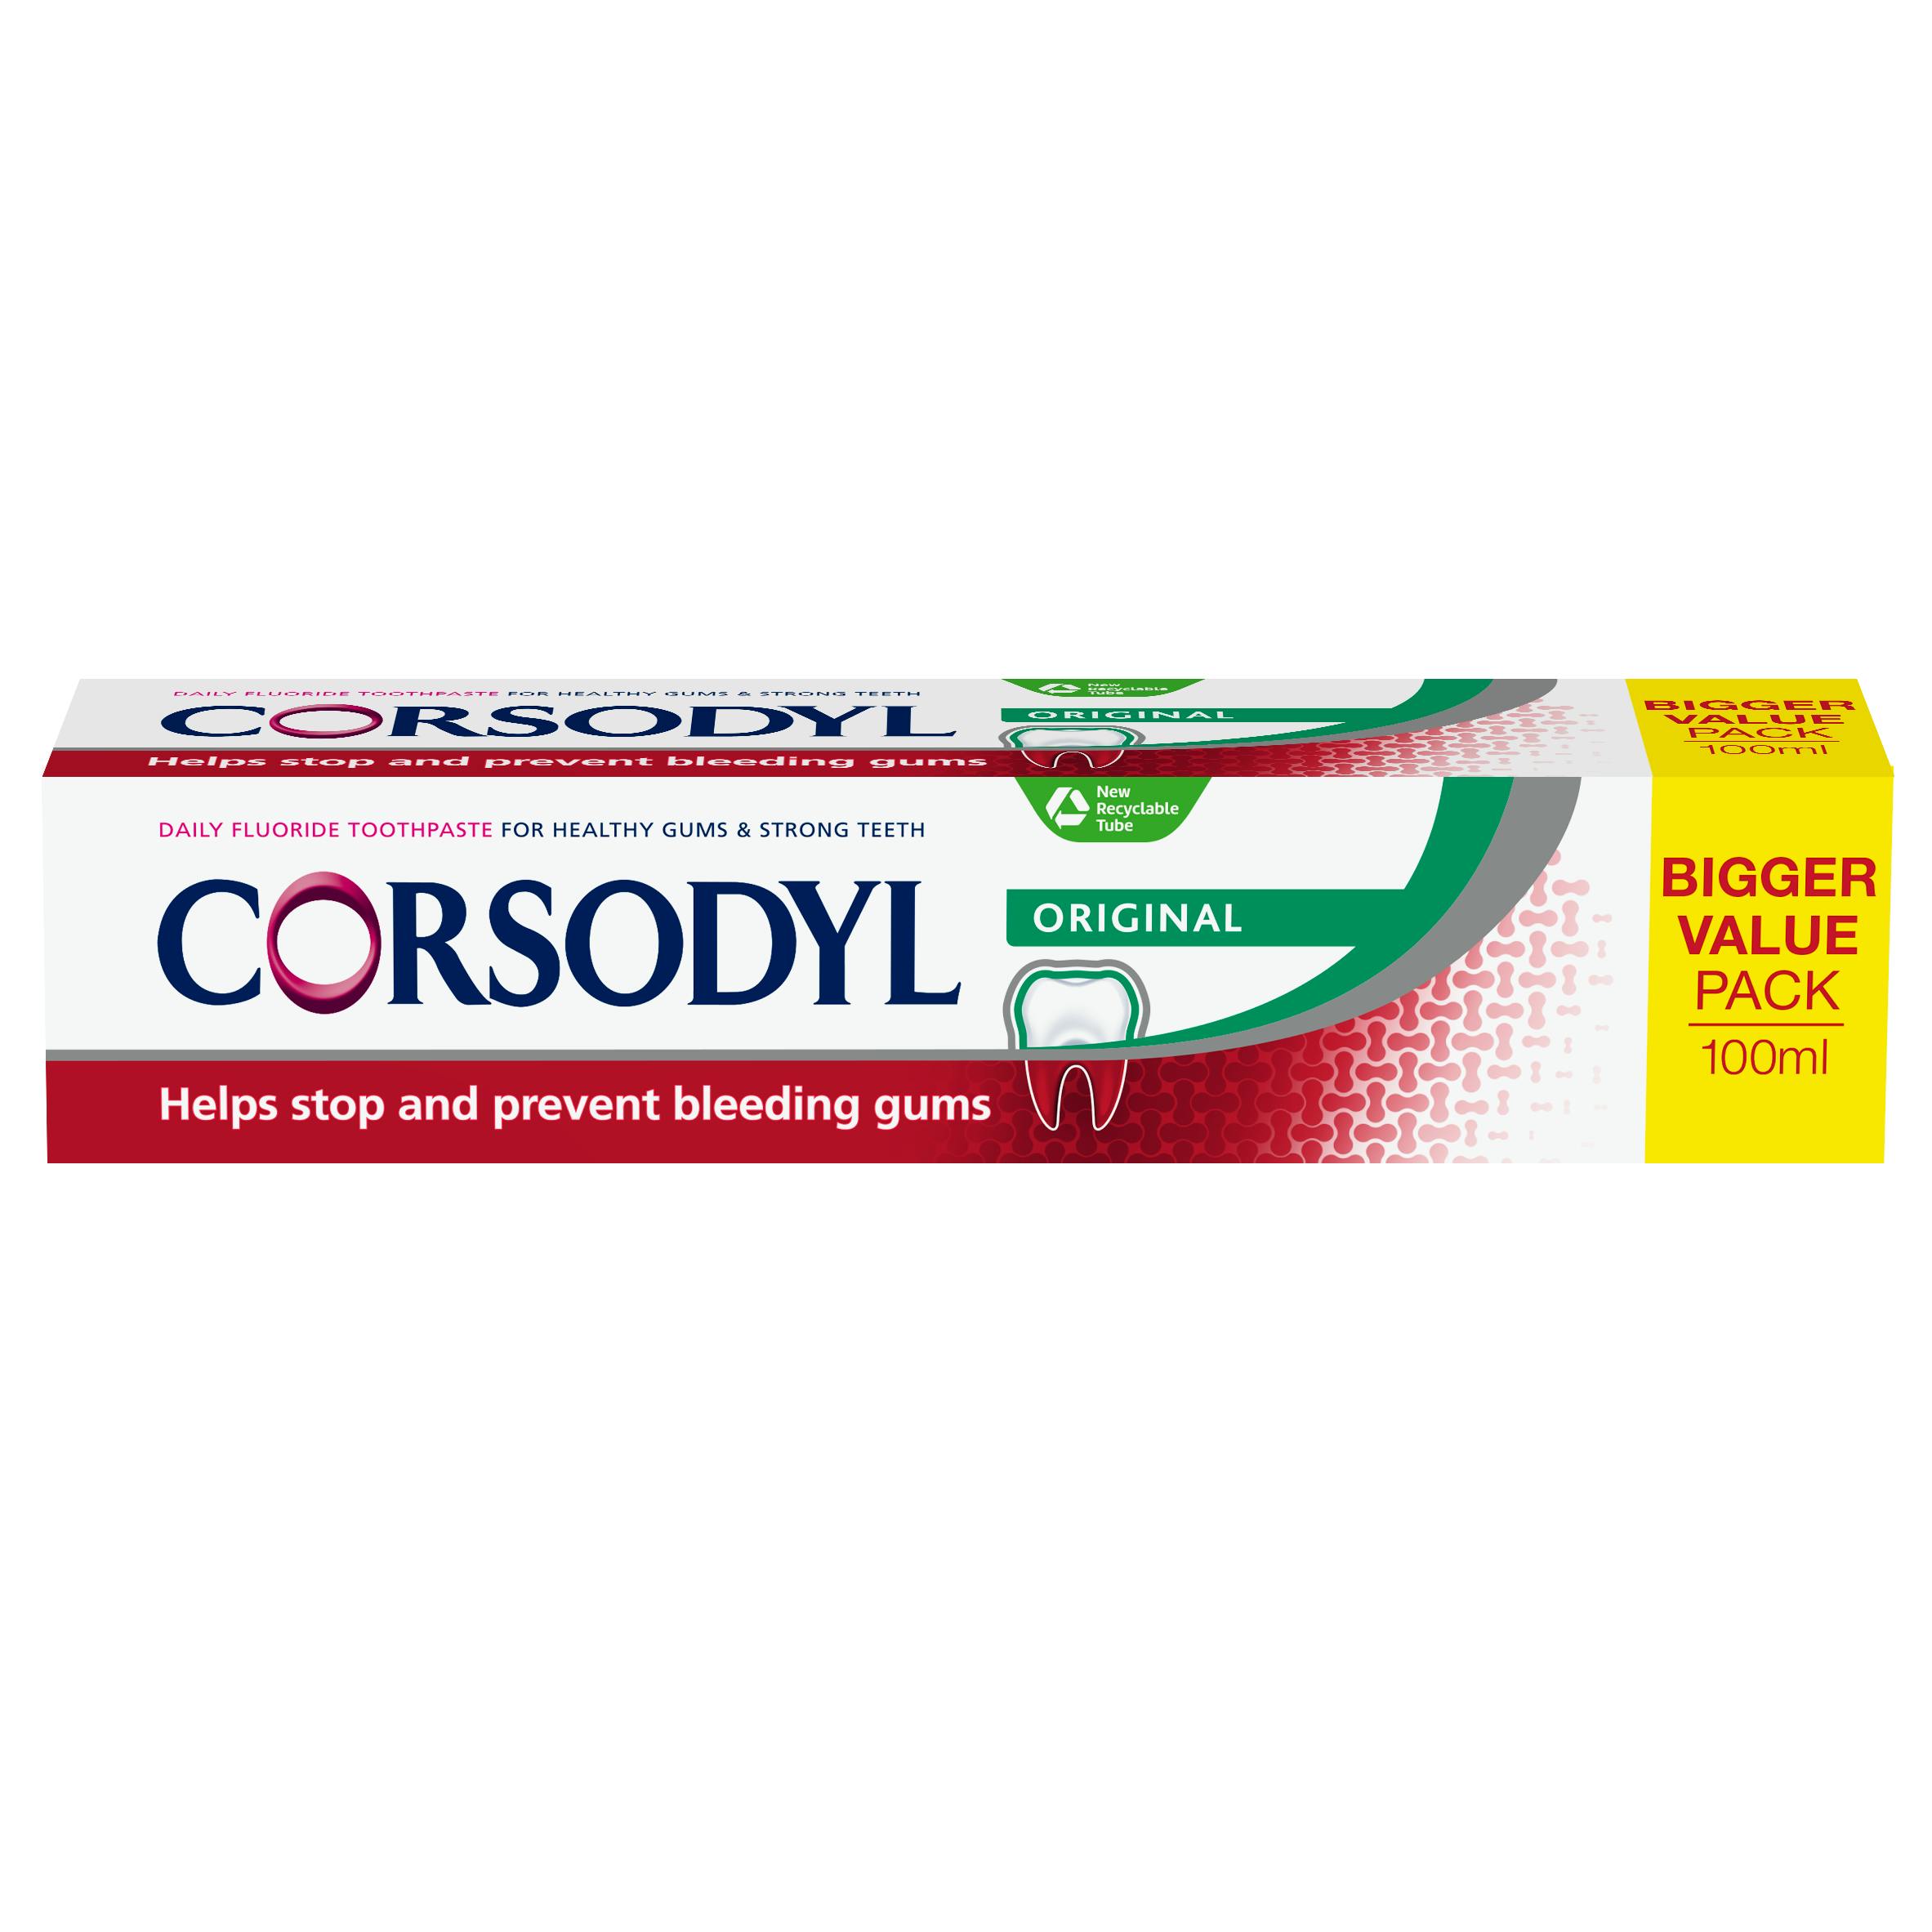 Corsodyl Original Fluoride toothpaste